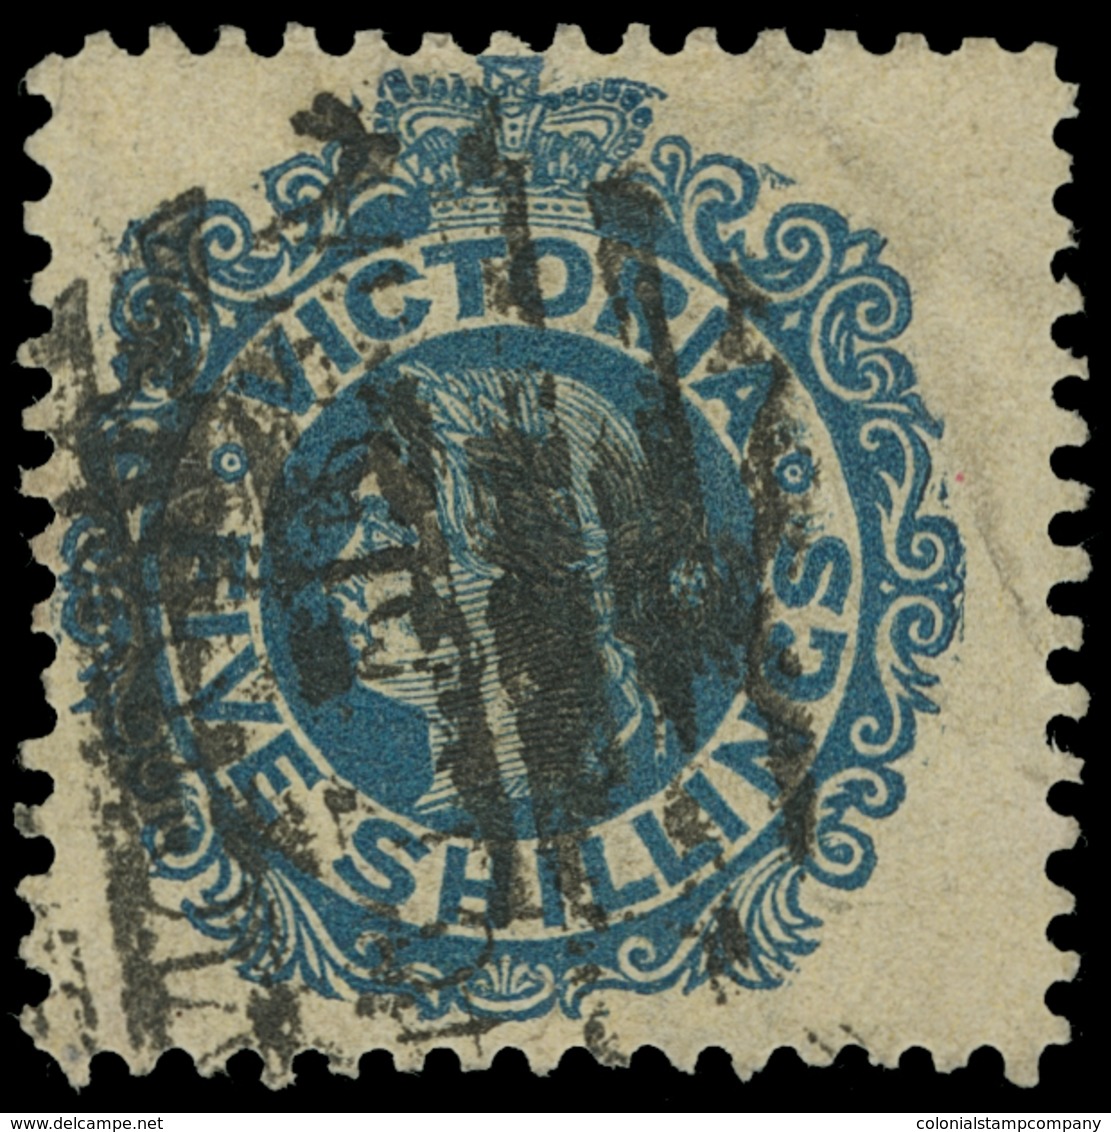 O Australia / Victoria - Lot No.181 - Mint Stamps